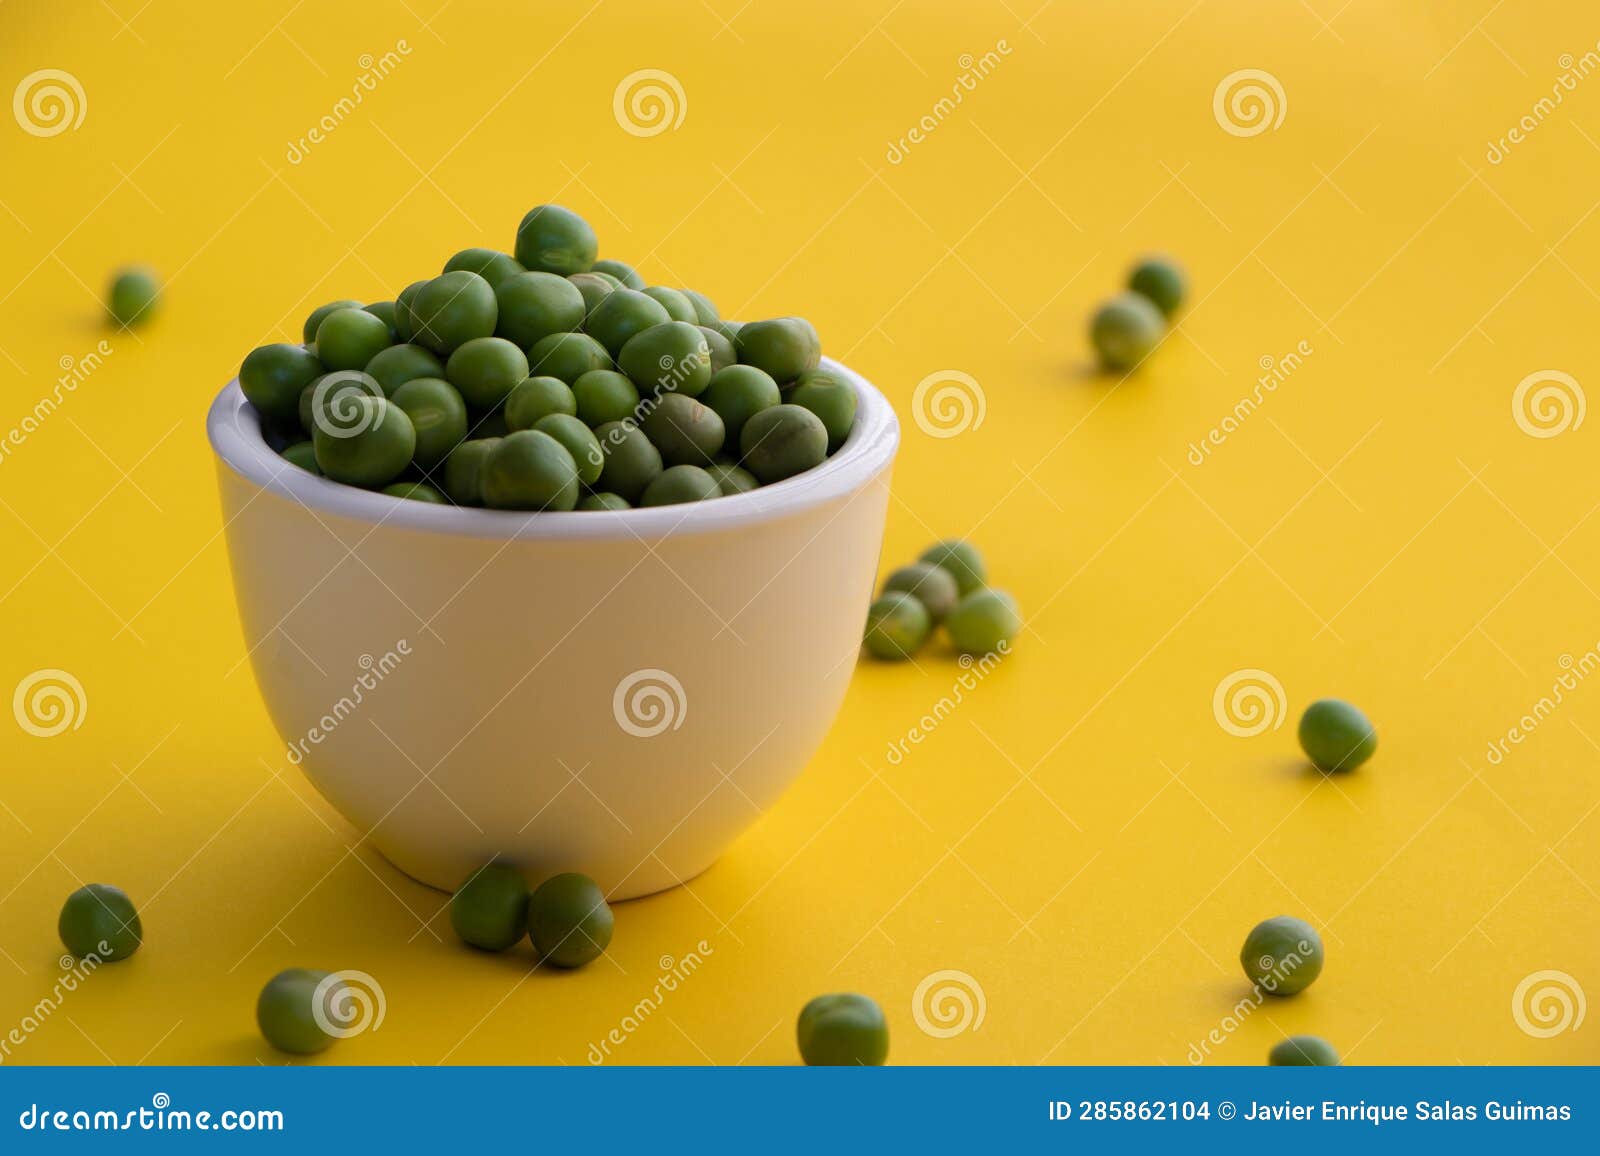 peas in a white bowl